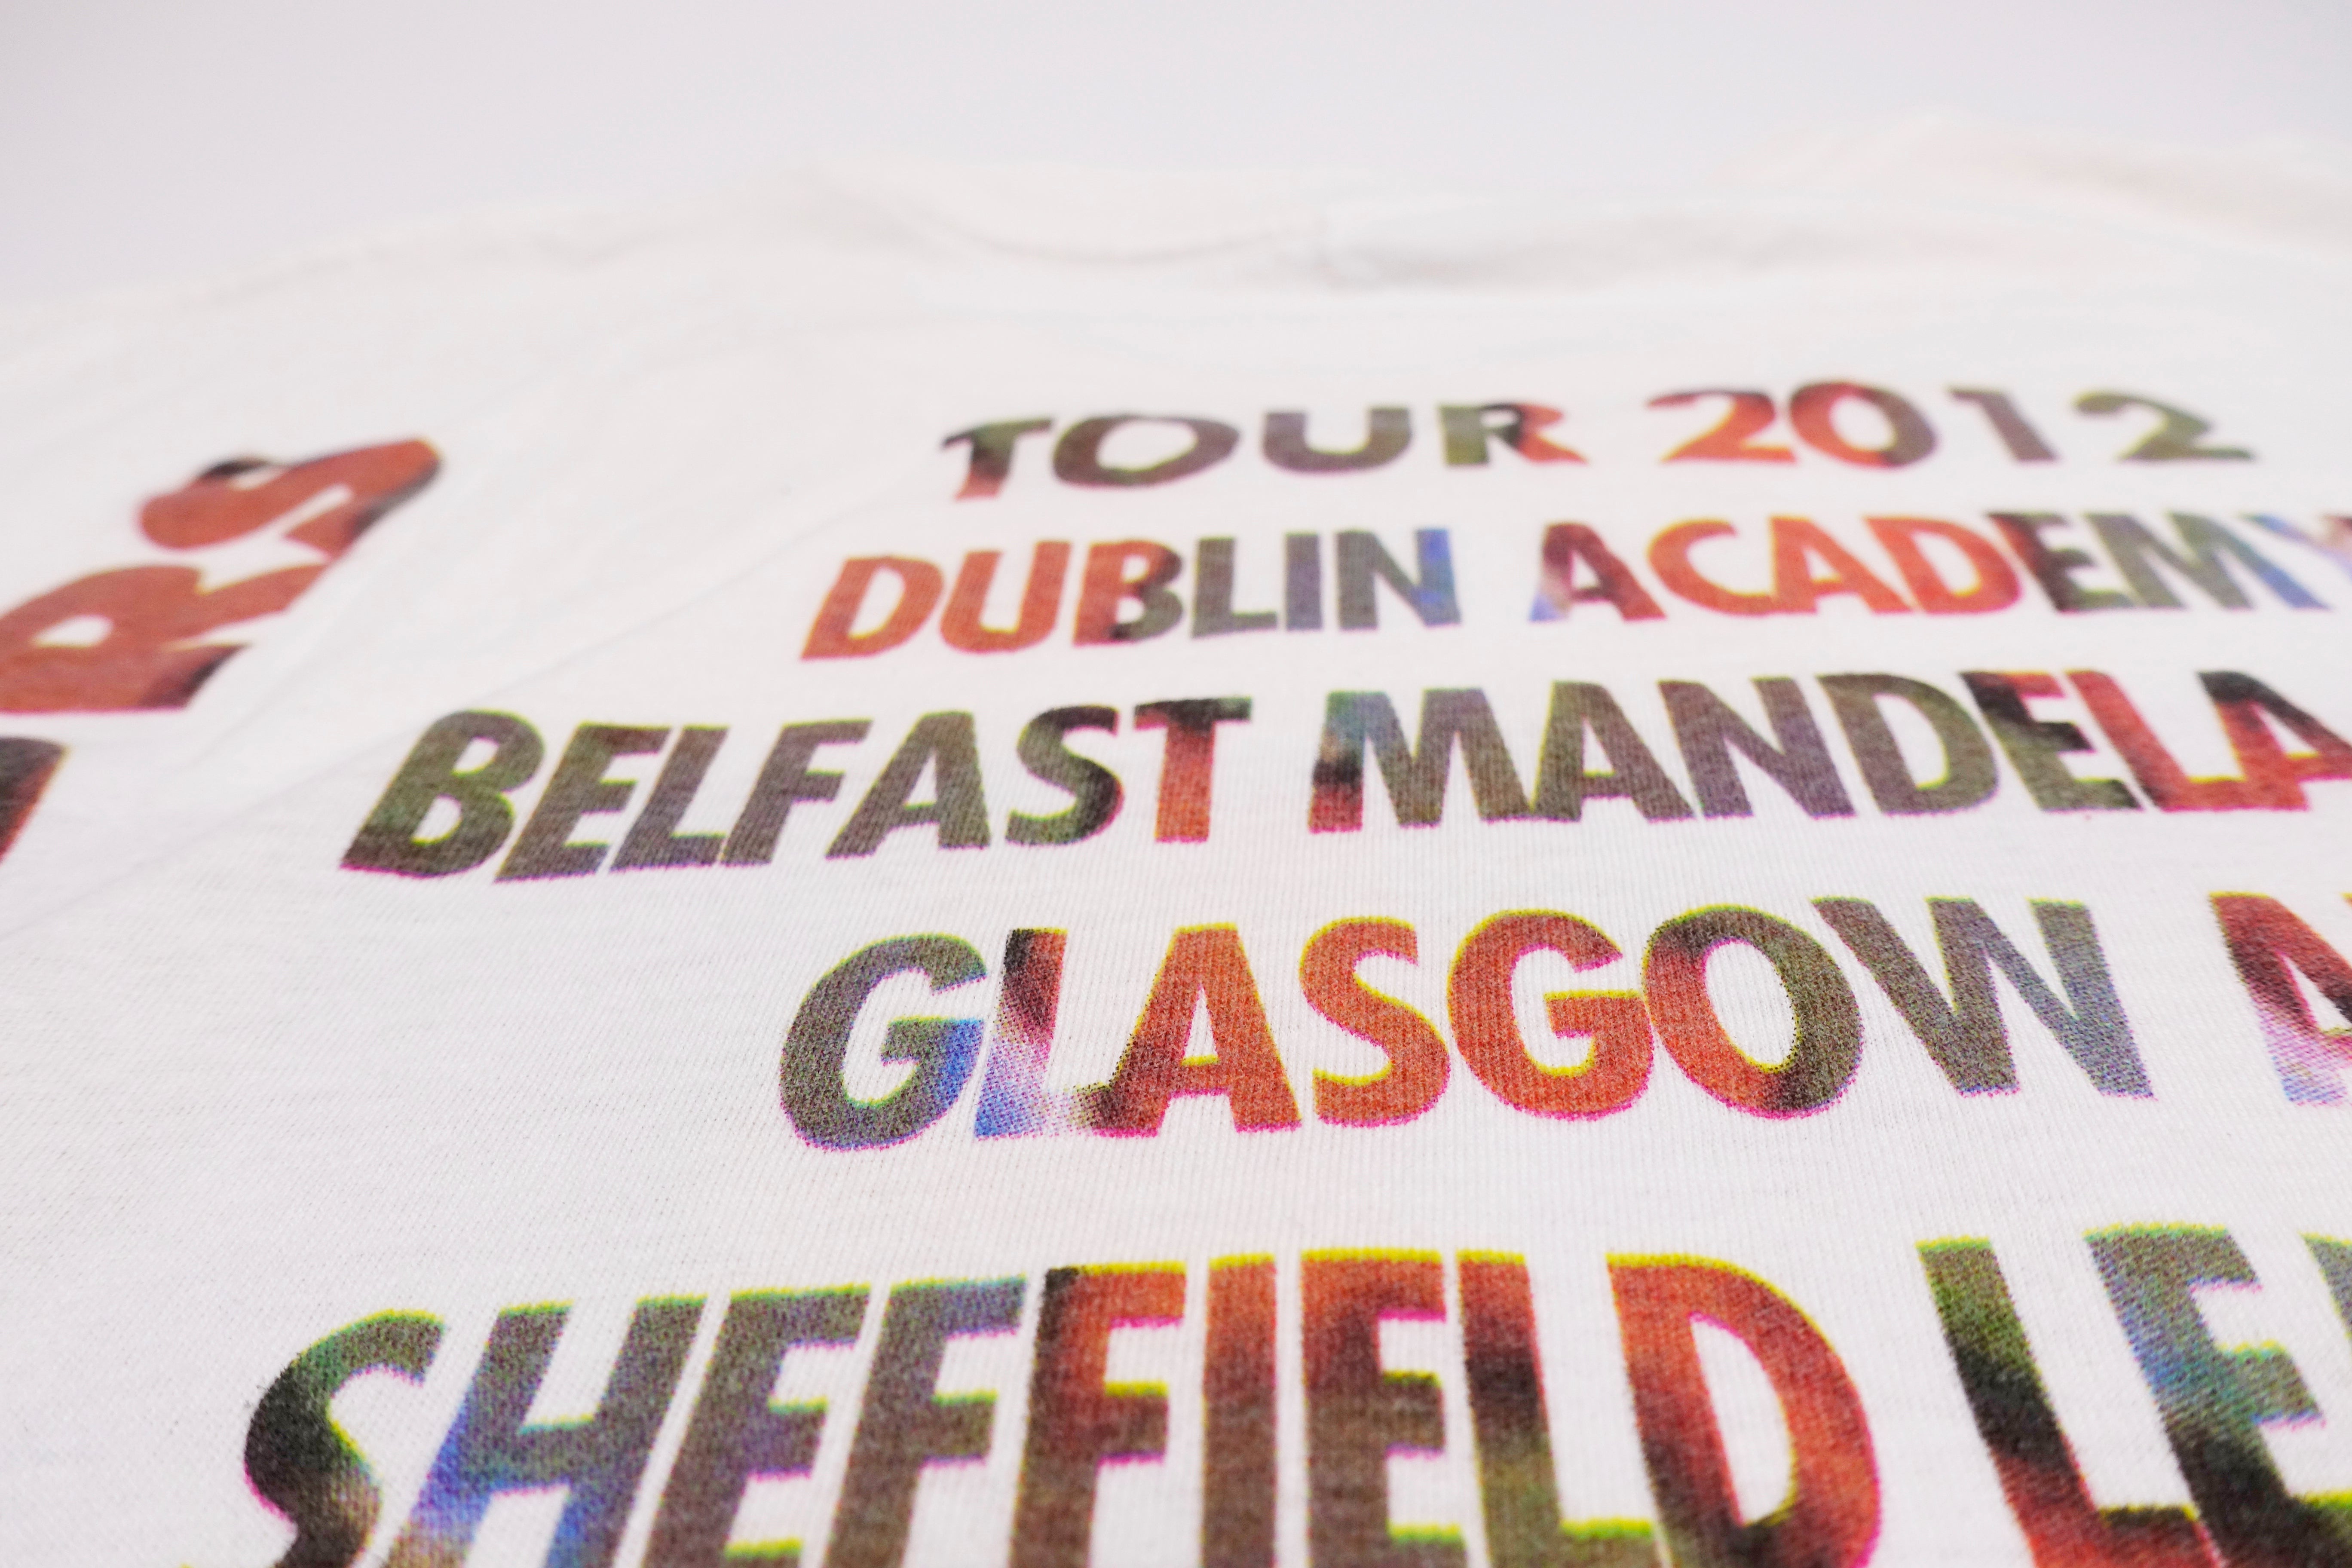 the Horrors - Higher 2012 UK Tour Shirt Size Large